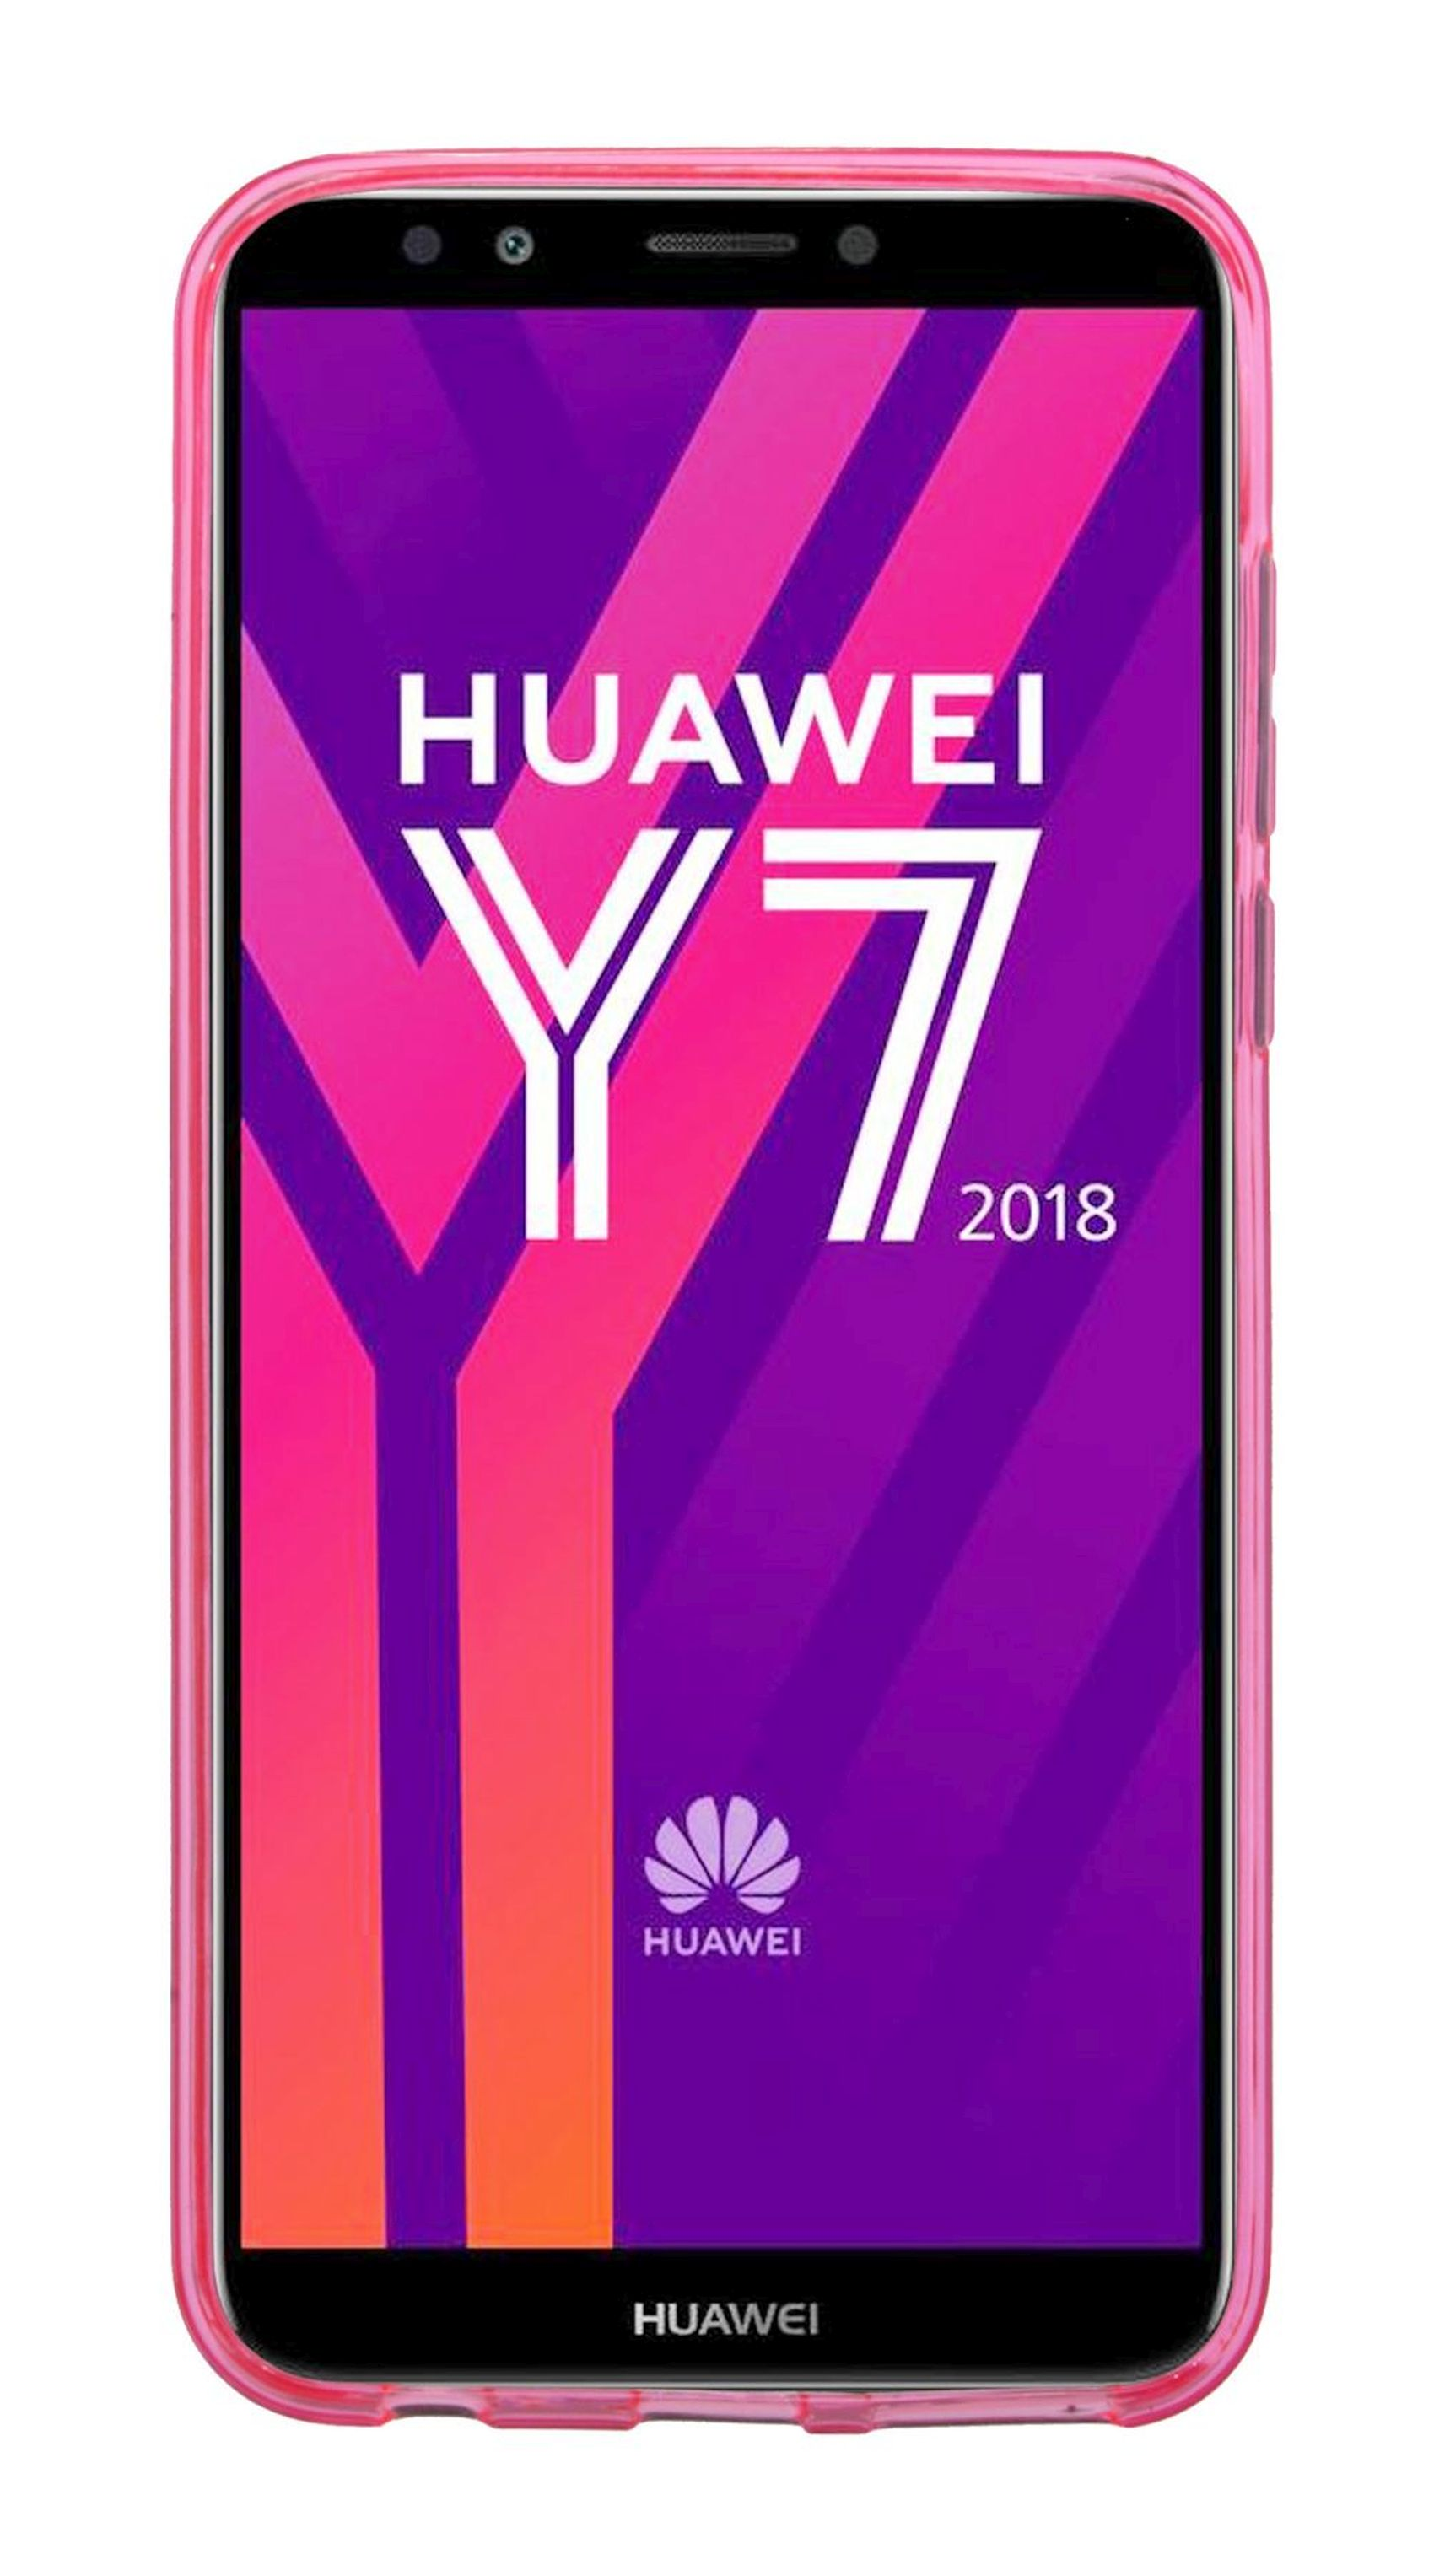 COFI S-Line Cover, Bumper, Huawei, Prime Rosa 2018, Y7